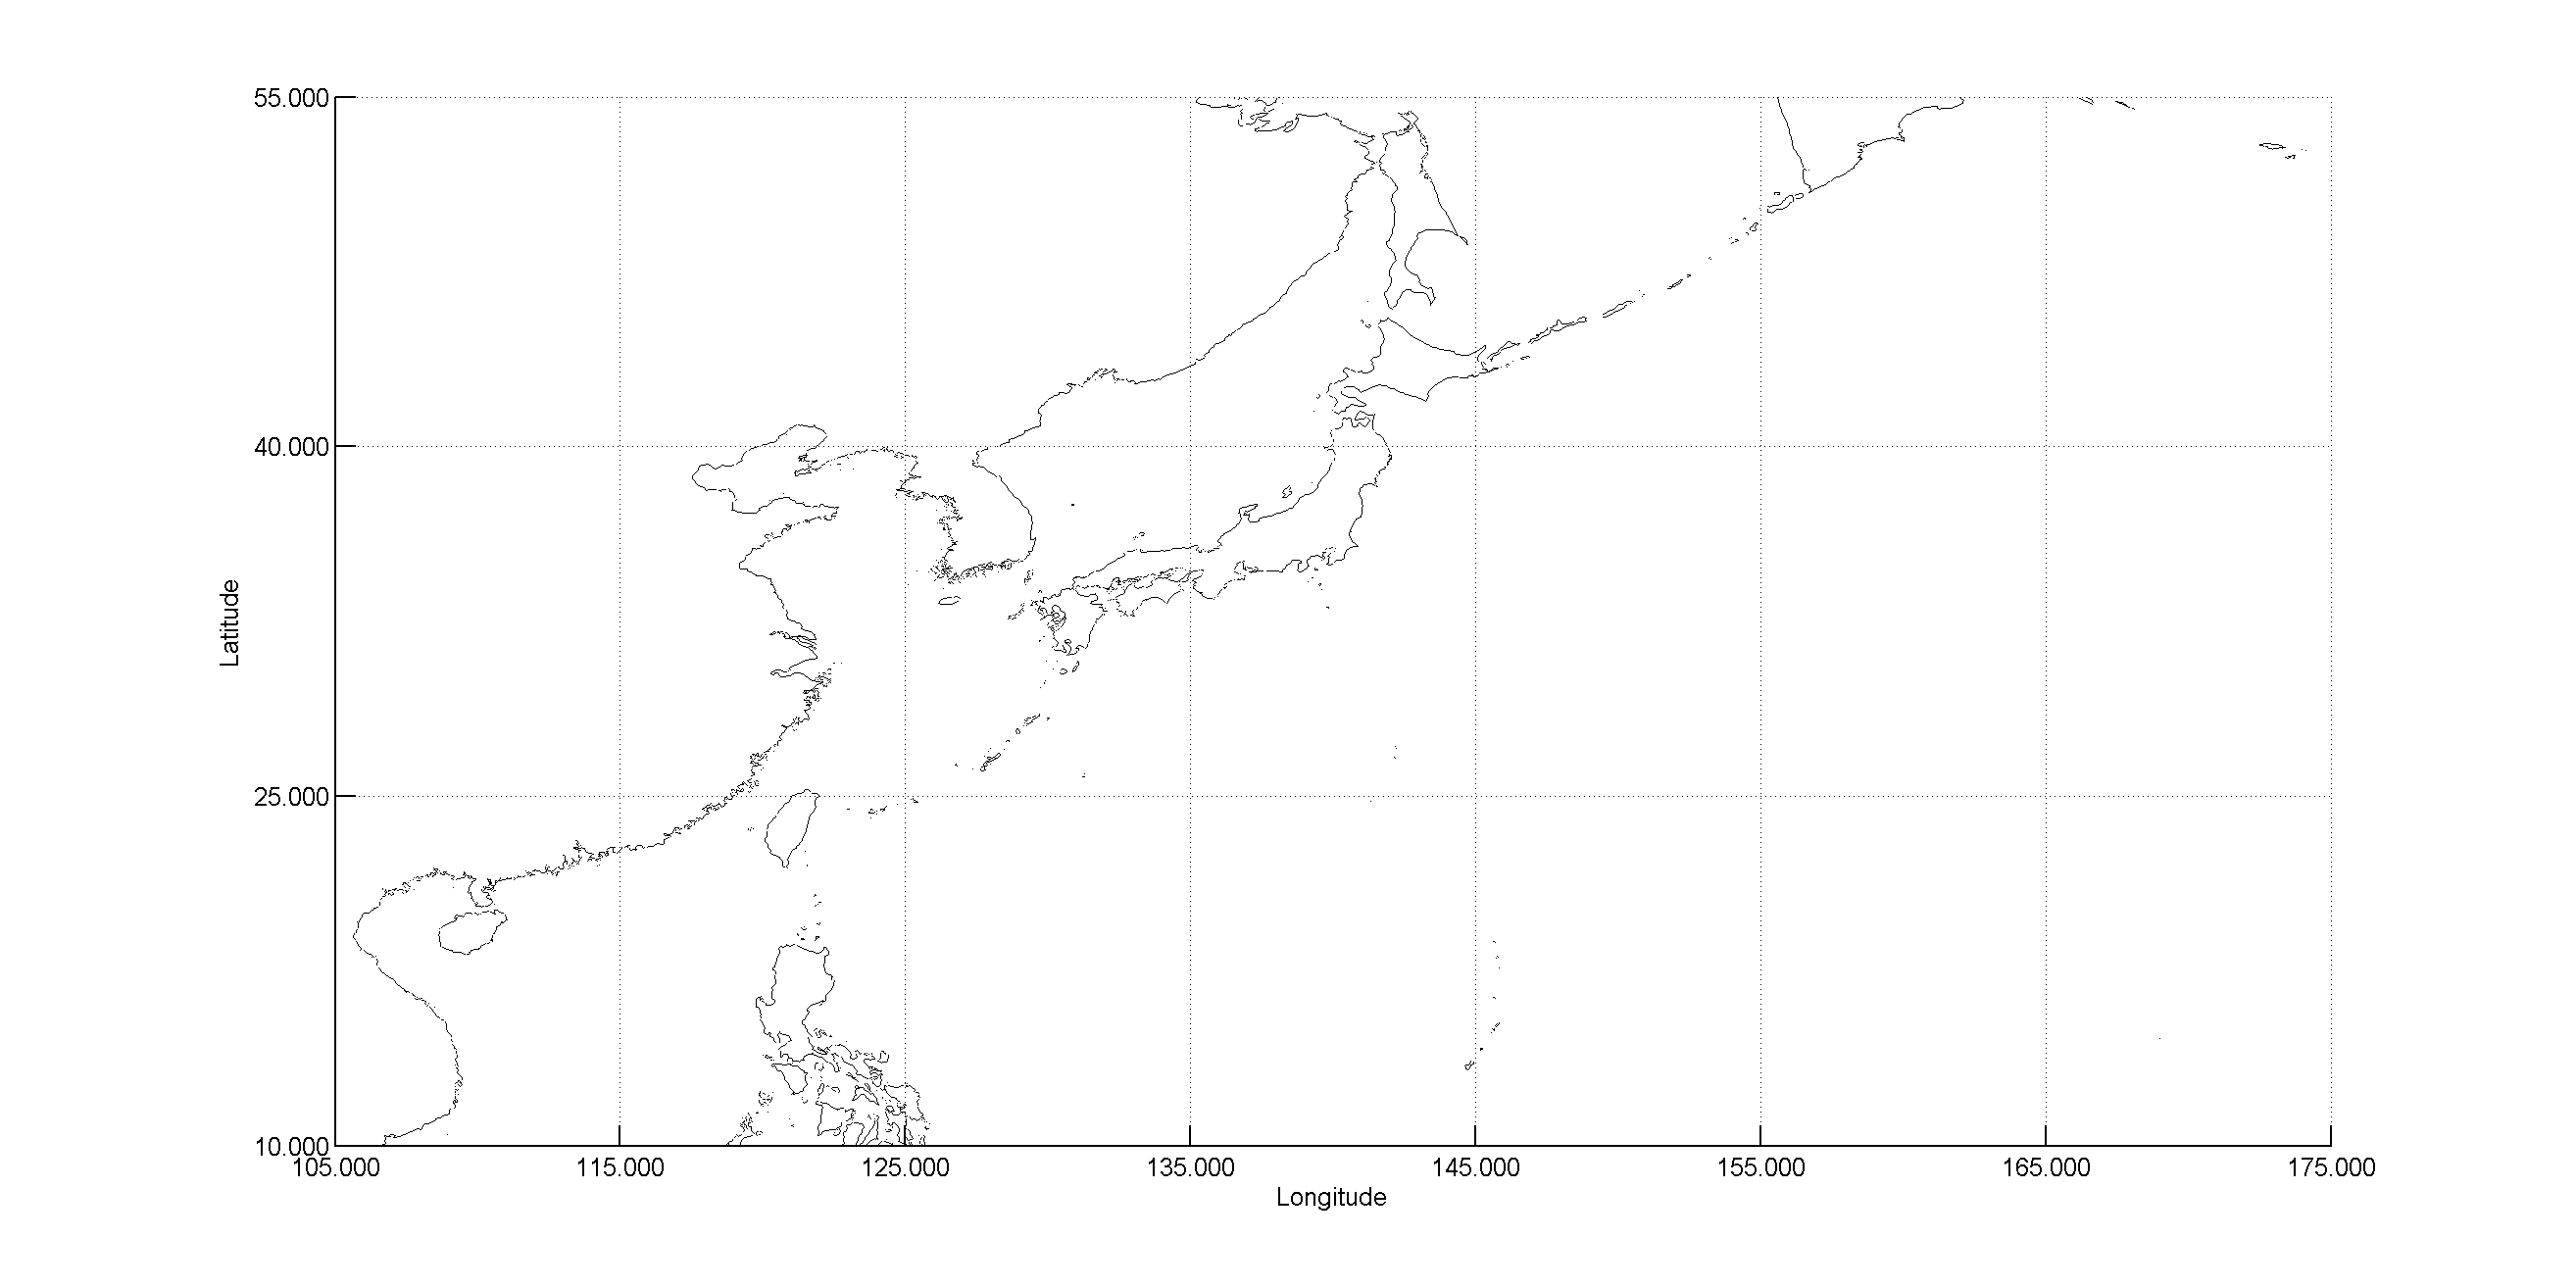 CYCLE_151 - Japan Descending passes